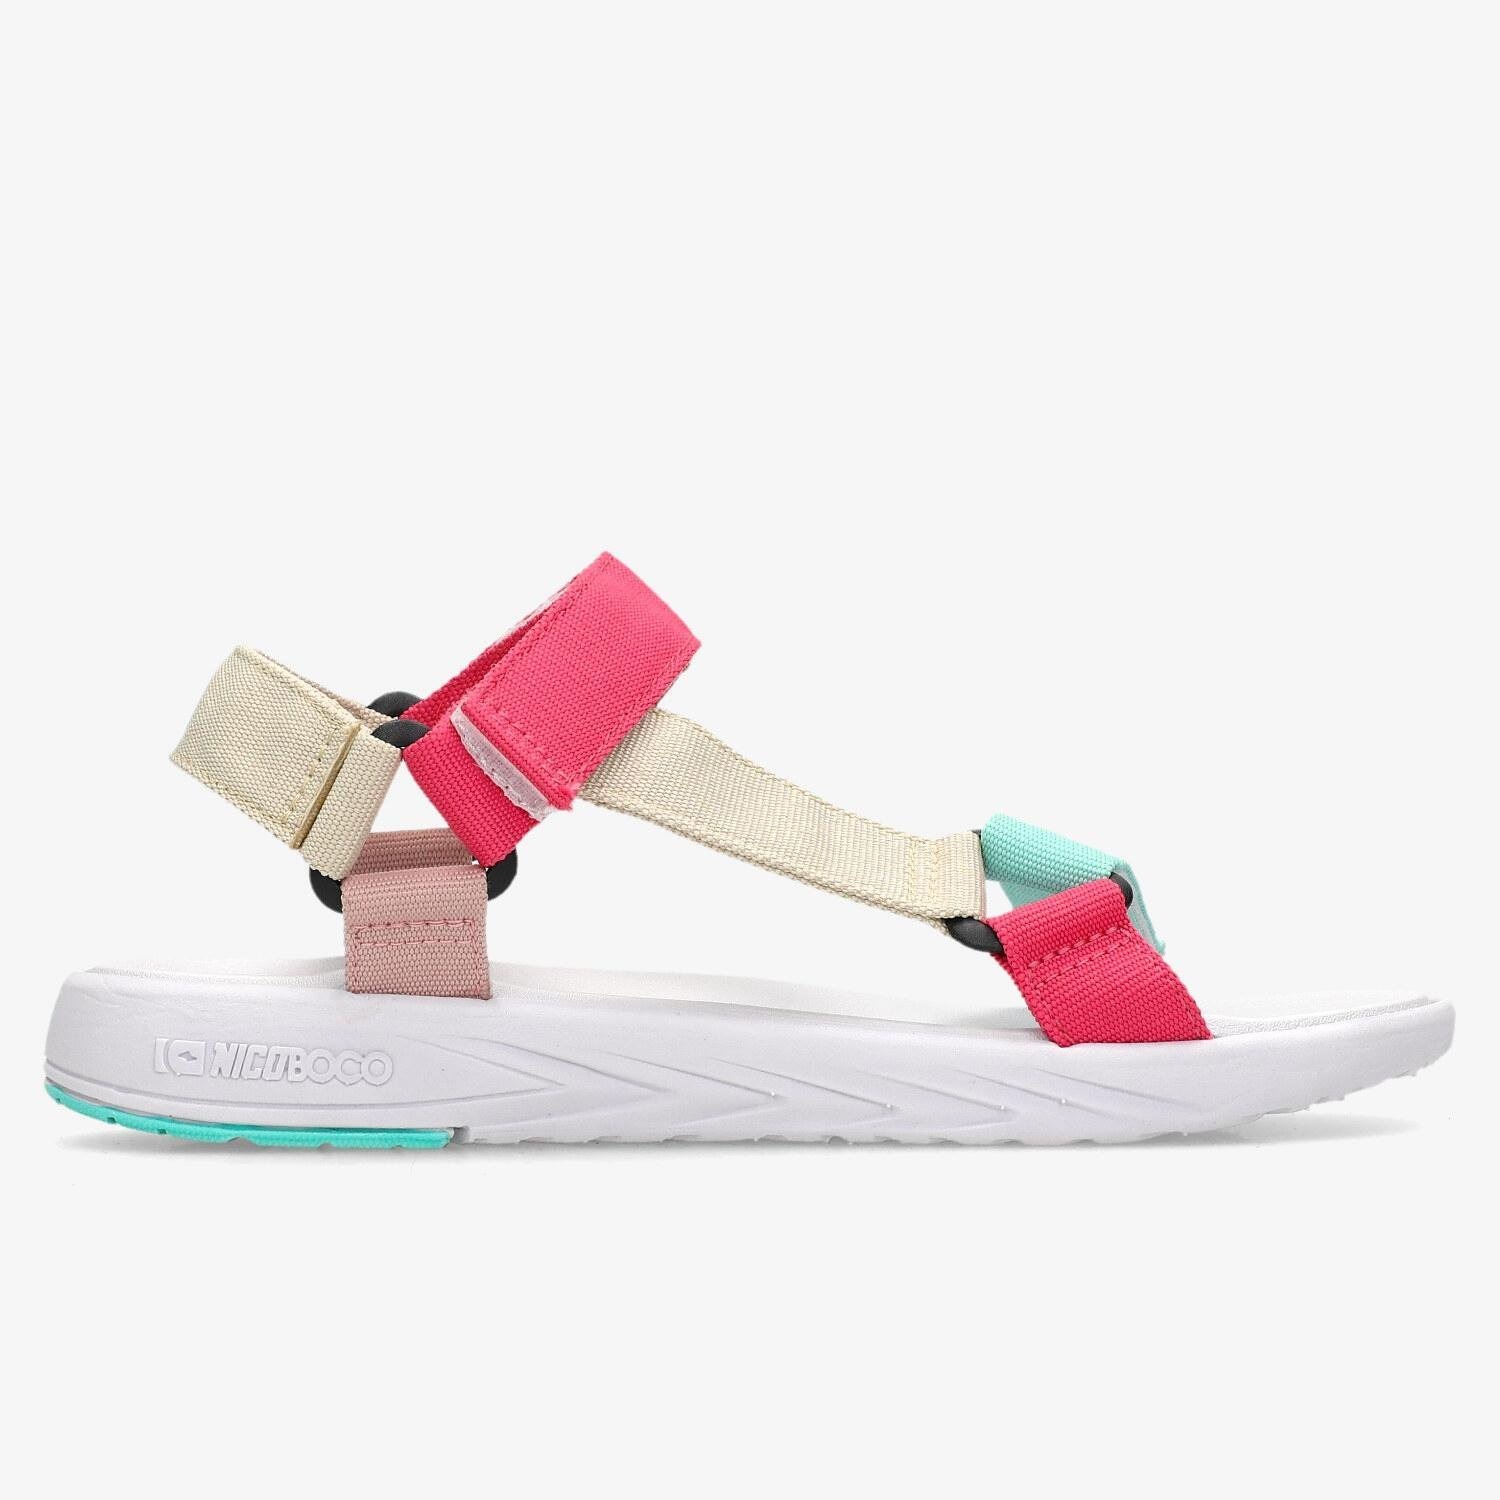 NICOBOCO Nicoboco kipa sandalen wit/roze dames dames